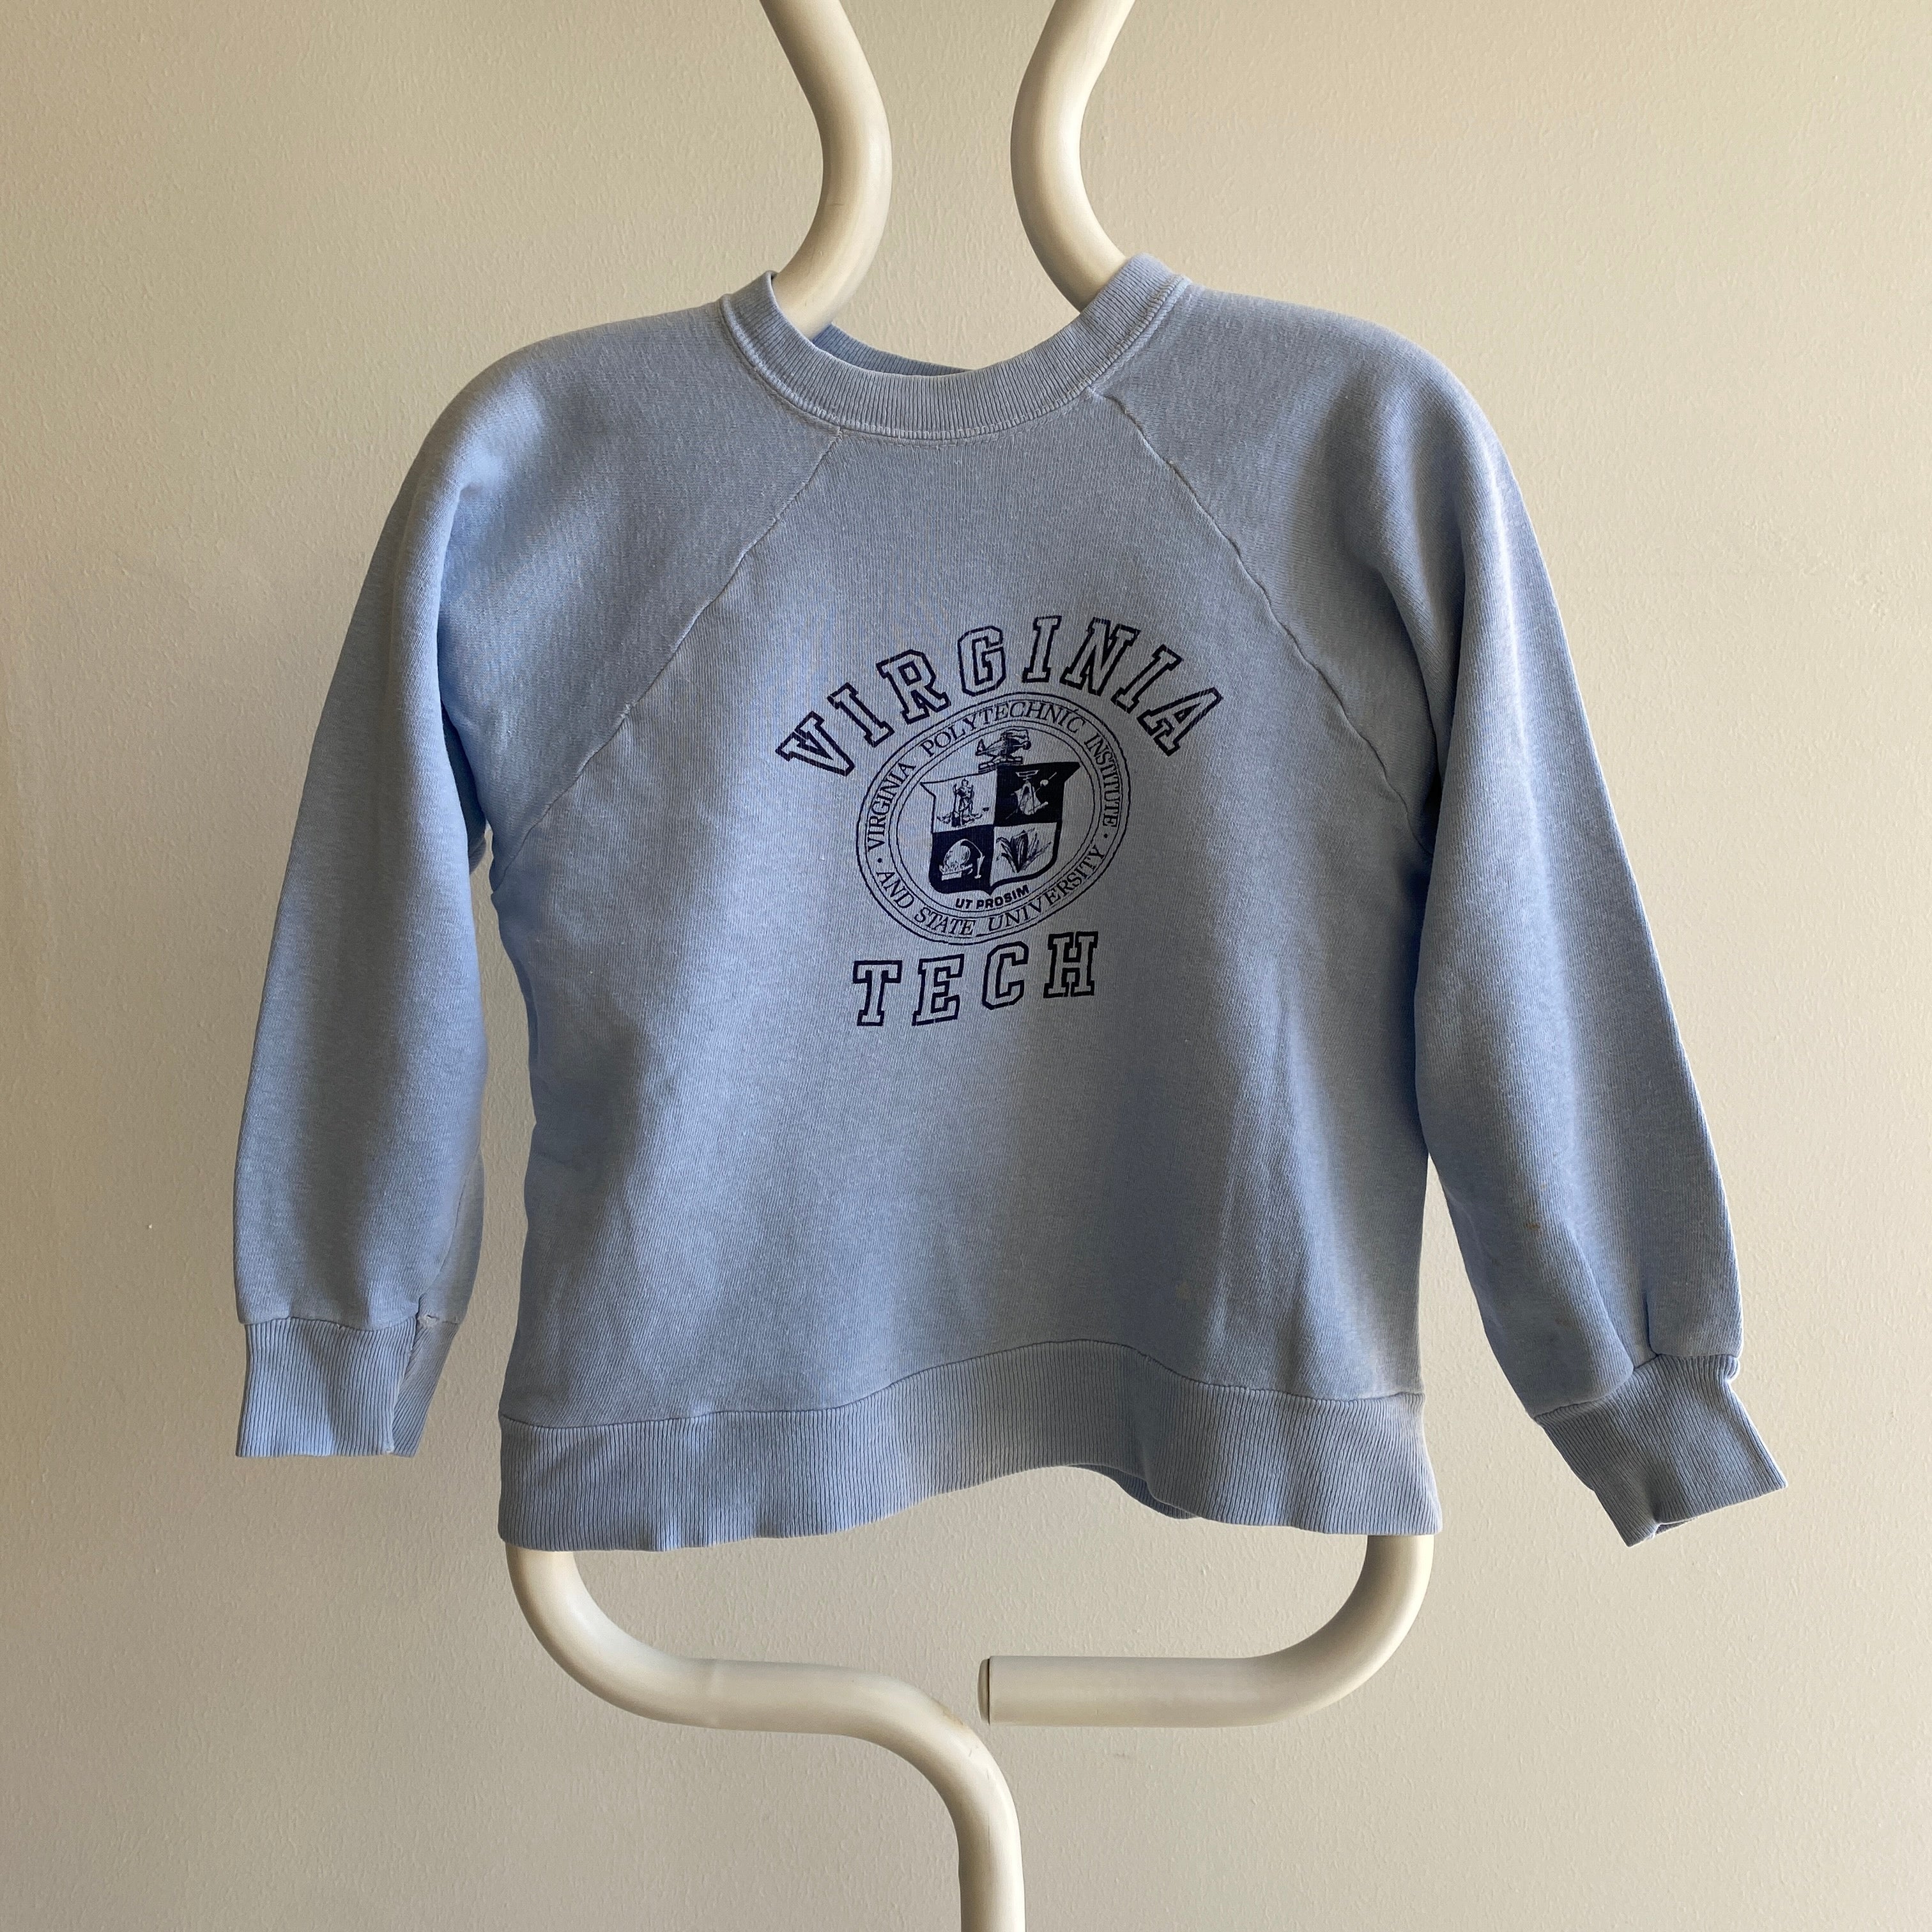 1960/70s Virginia Tech Smaller Sized University Sweatshirt